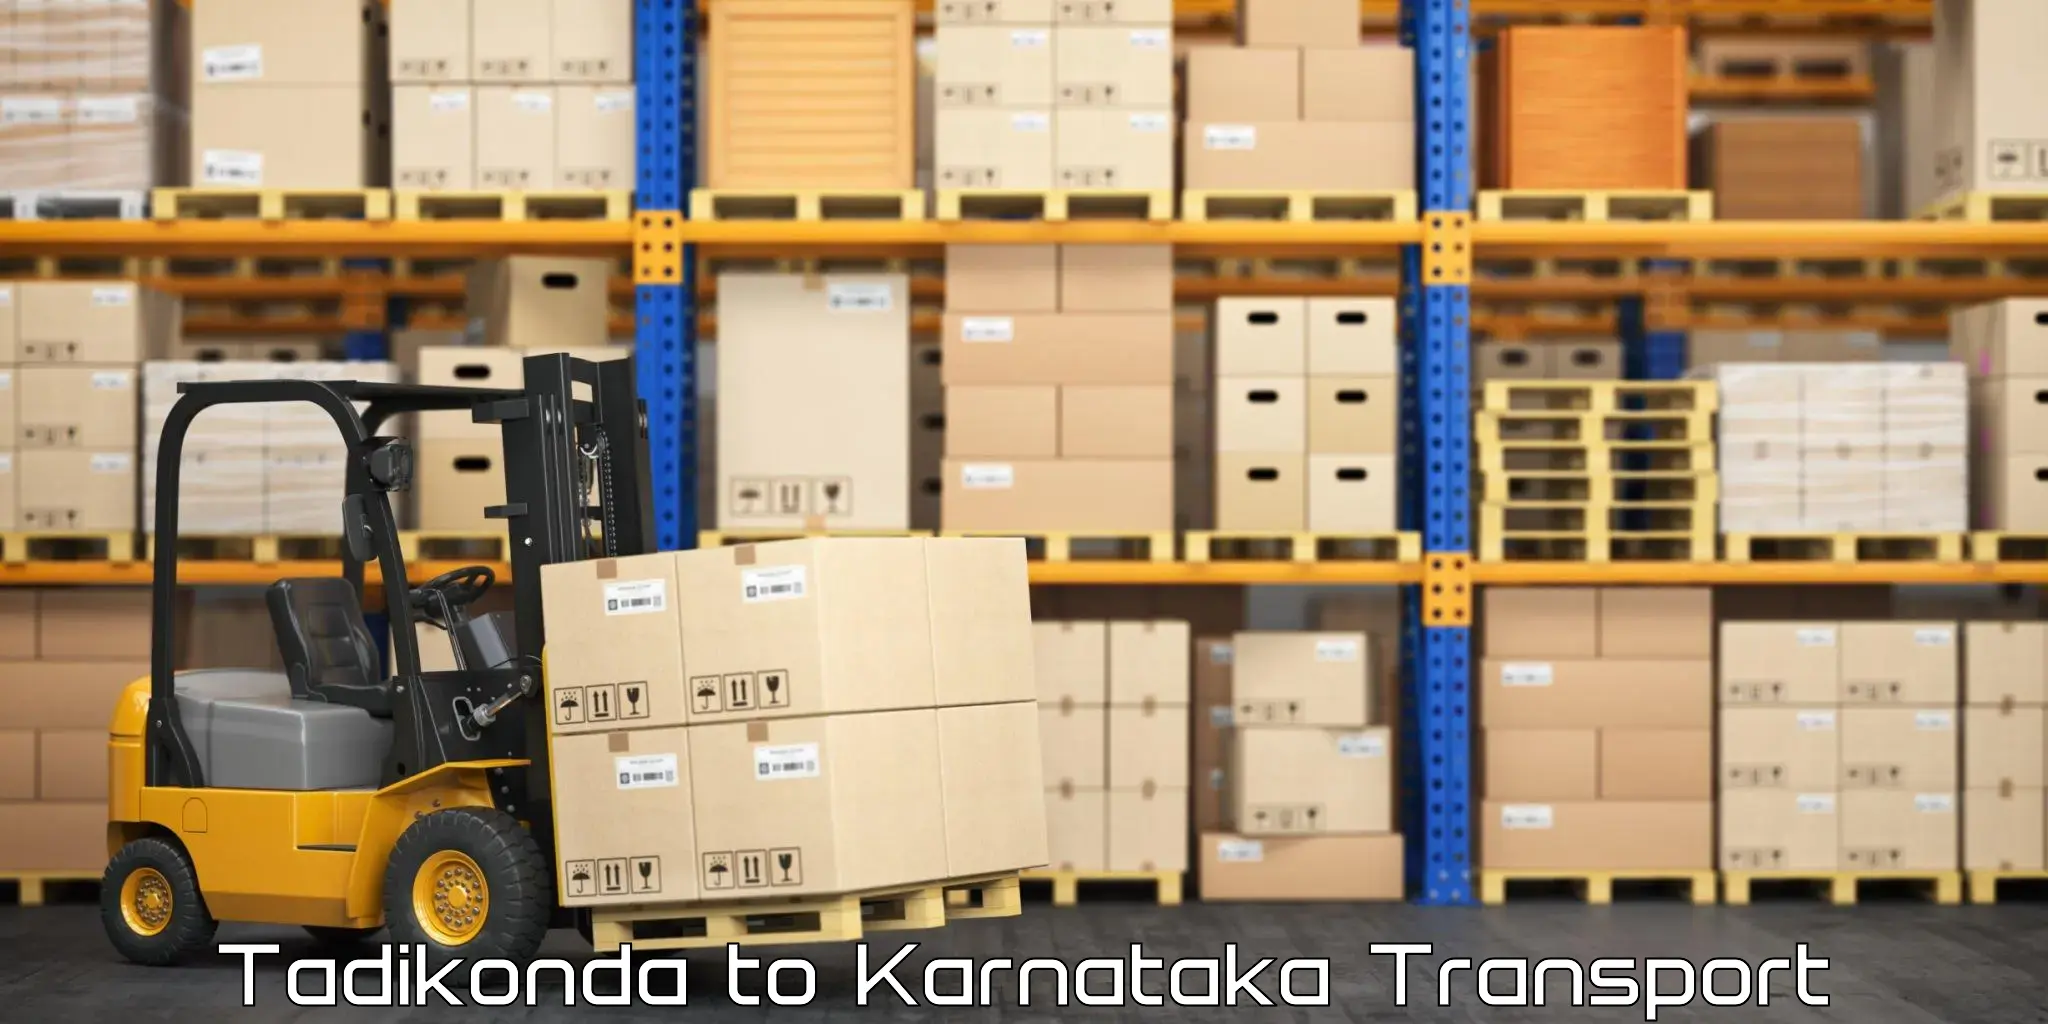 Lorry transport service Tadikonda to Kulshekar